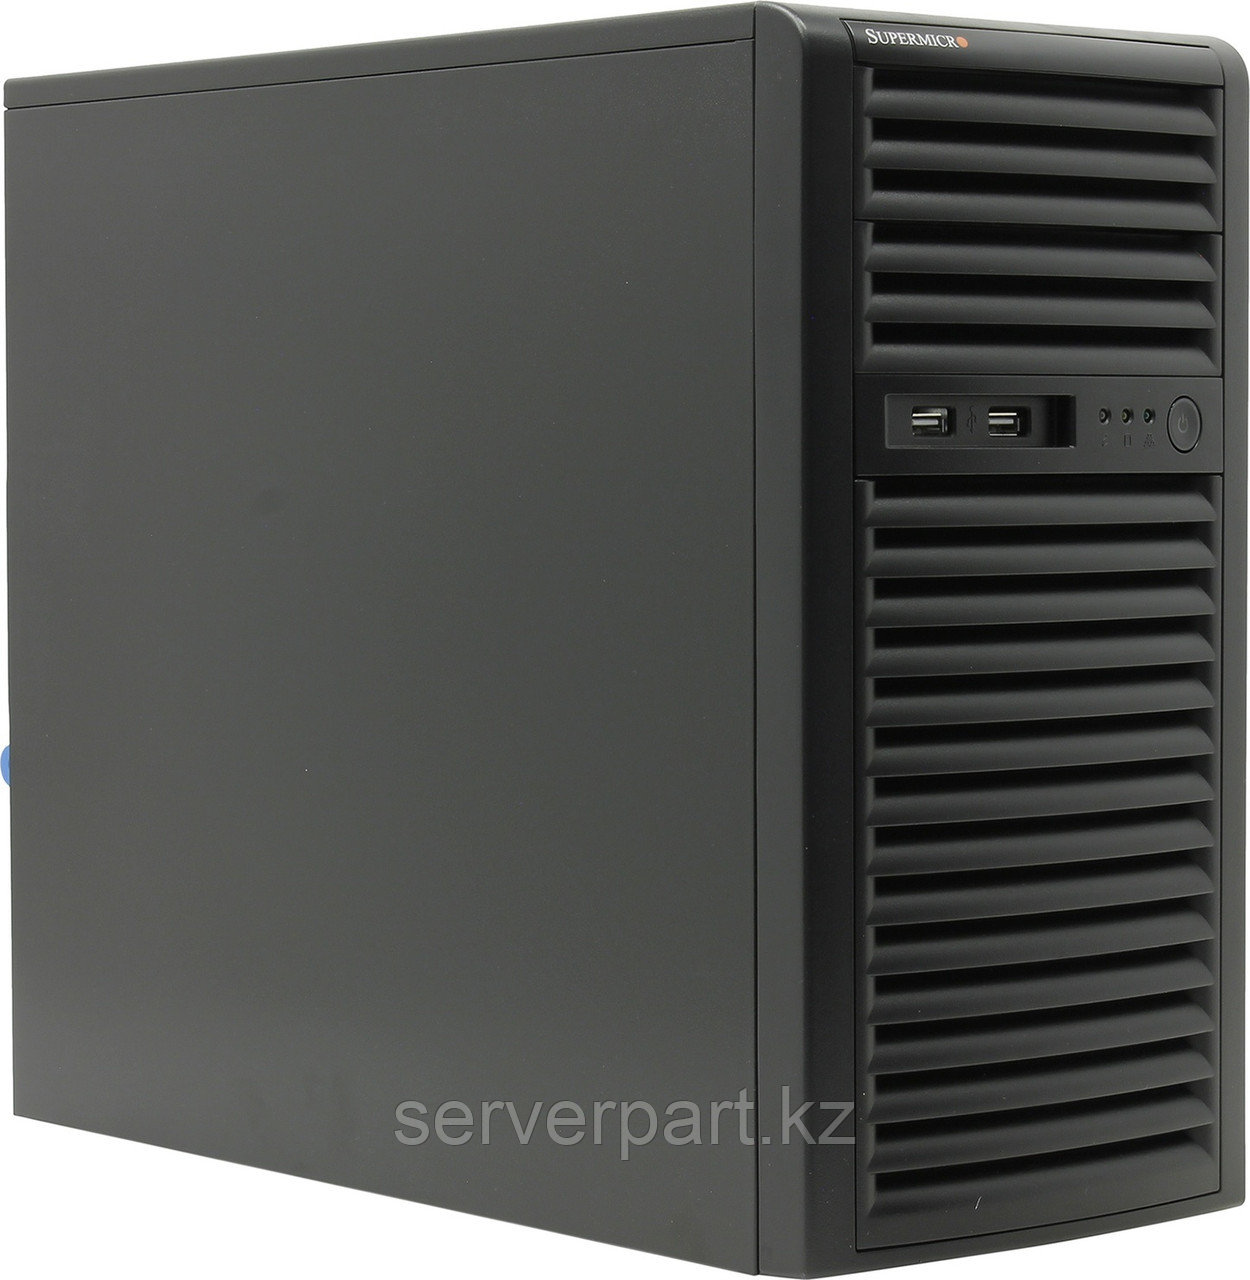 Сервер Supermicro SYS-5039D Tower/4-core intel xeon E3-1220v6 3GHz/16GB UDIMM nECC/1x240GB SSD MU Hyb, фото 1